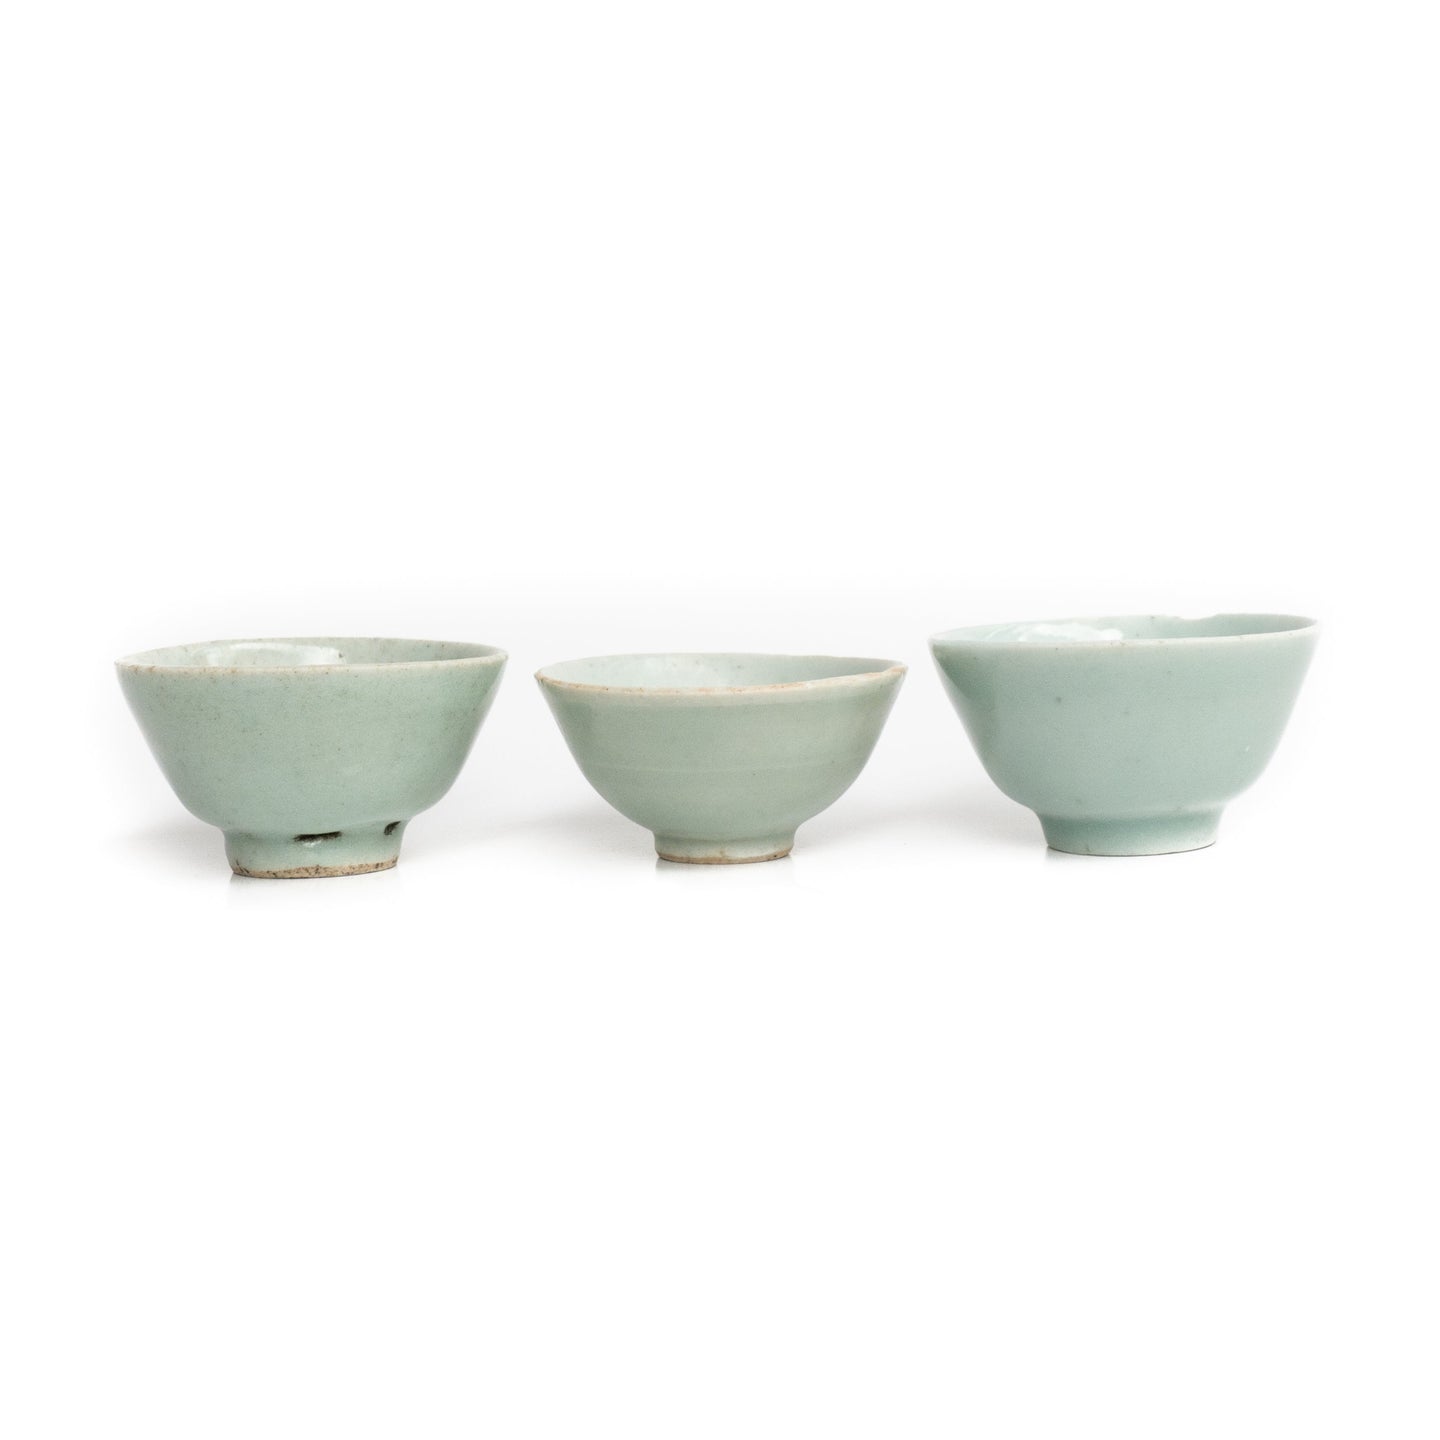 40ml-50ml Qing Dynasty Douqing (Green) Antique Cup